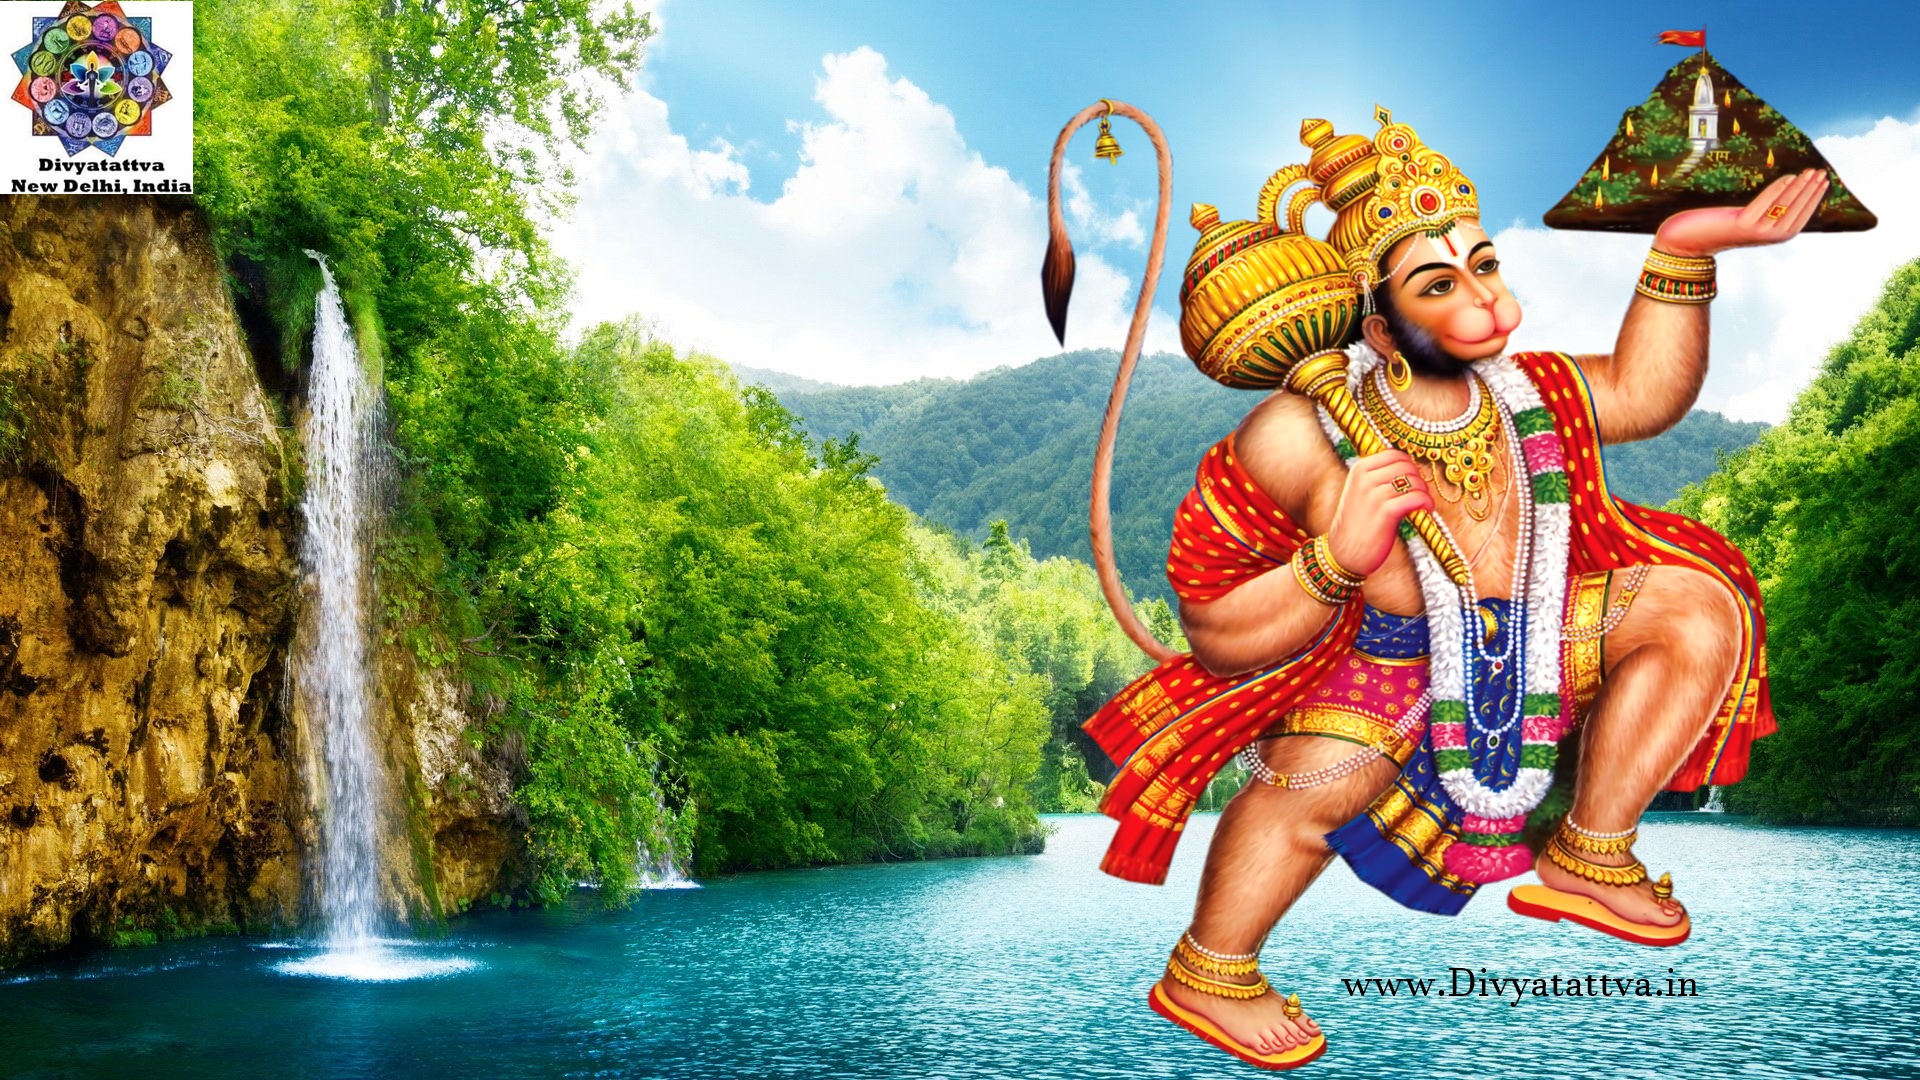 lord hanuman images for mobile wallpaper, lord hanuman full hd wallpaper download,lord hanuman digital wallpaper